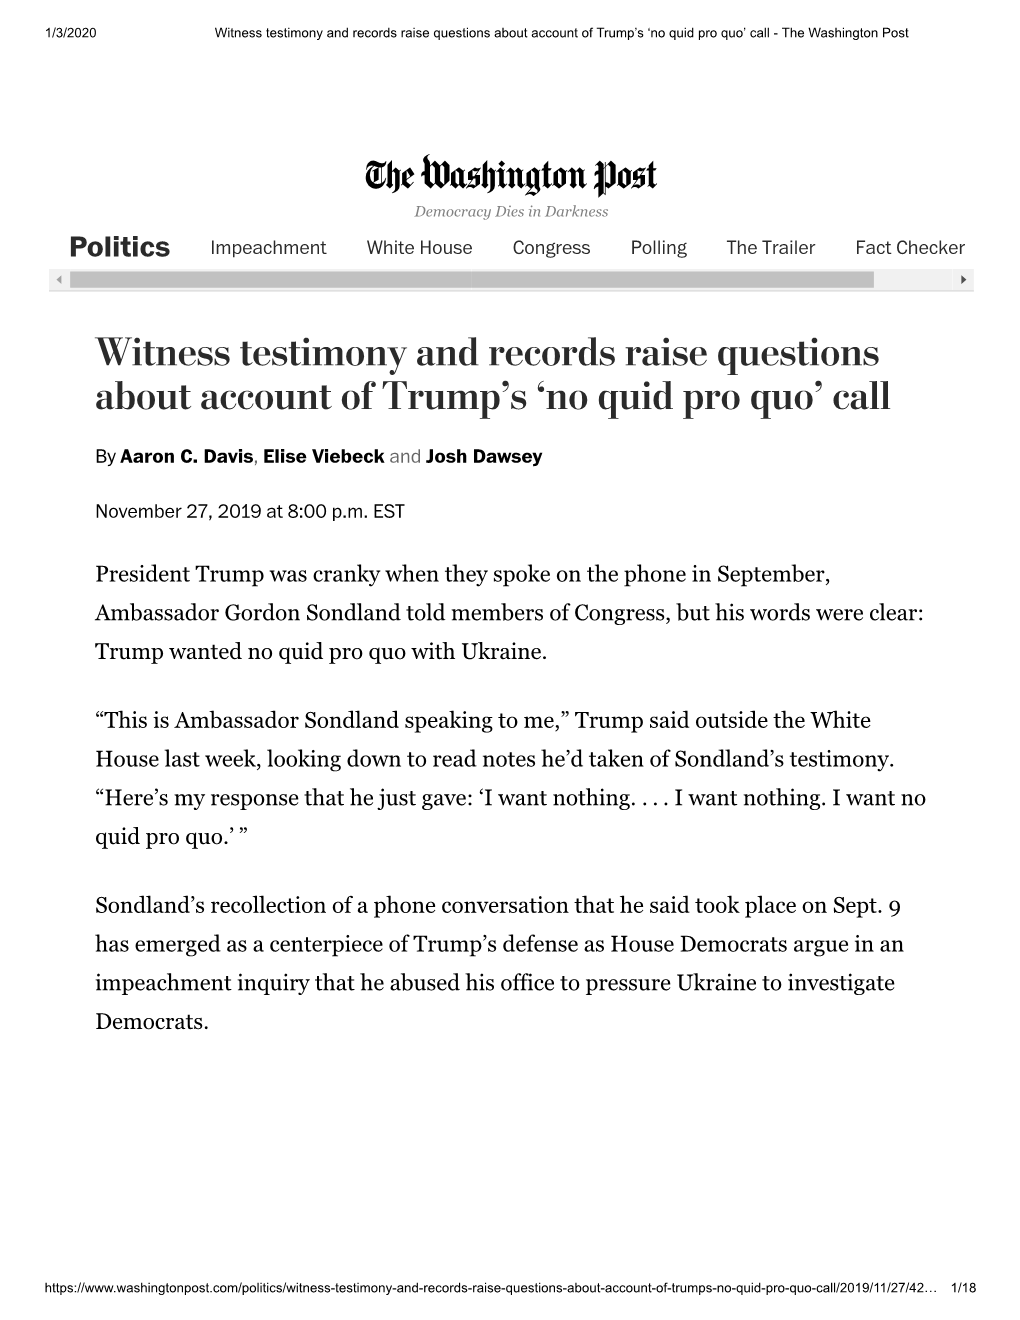 No Quid Pro Quo’ Call - the Washington Post